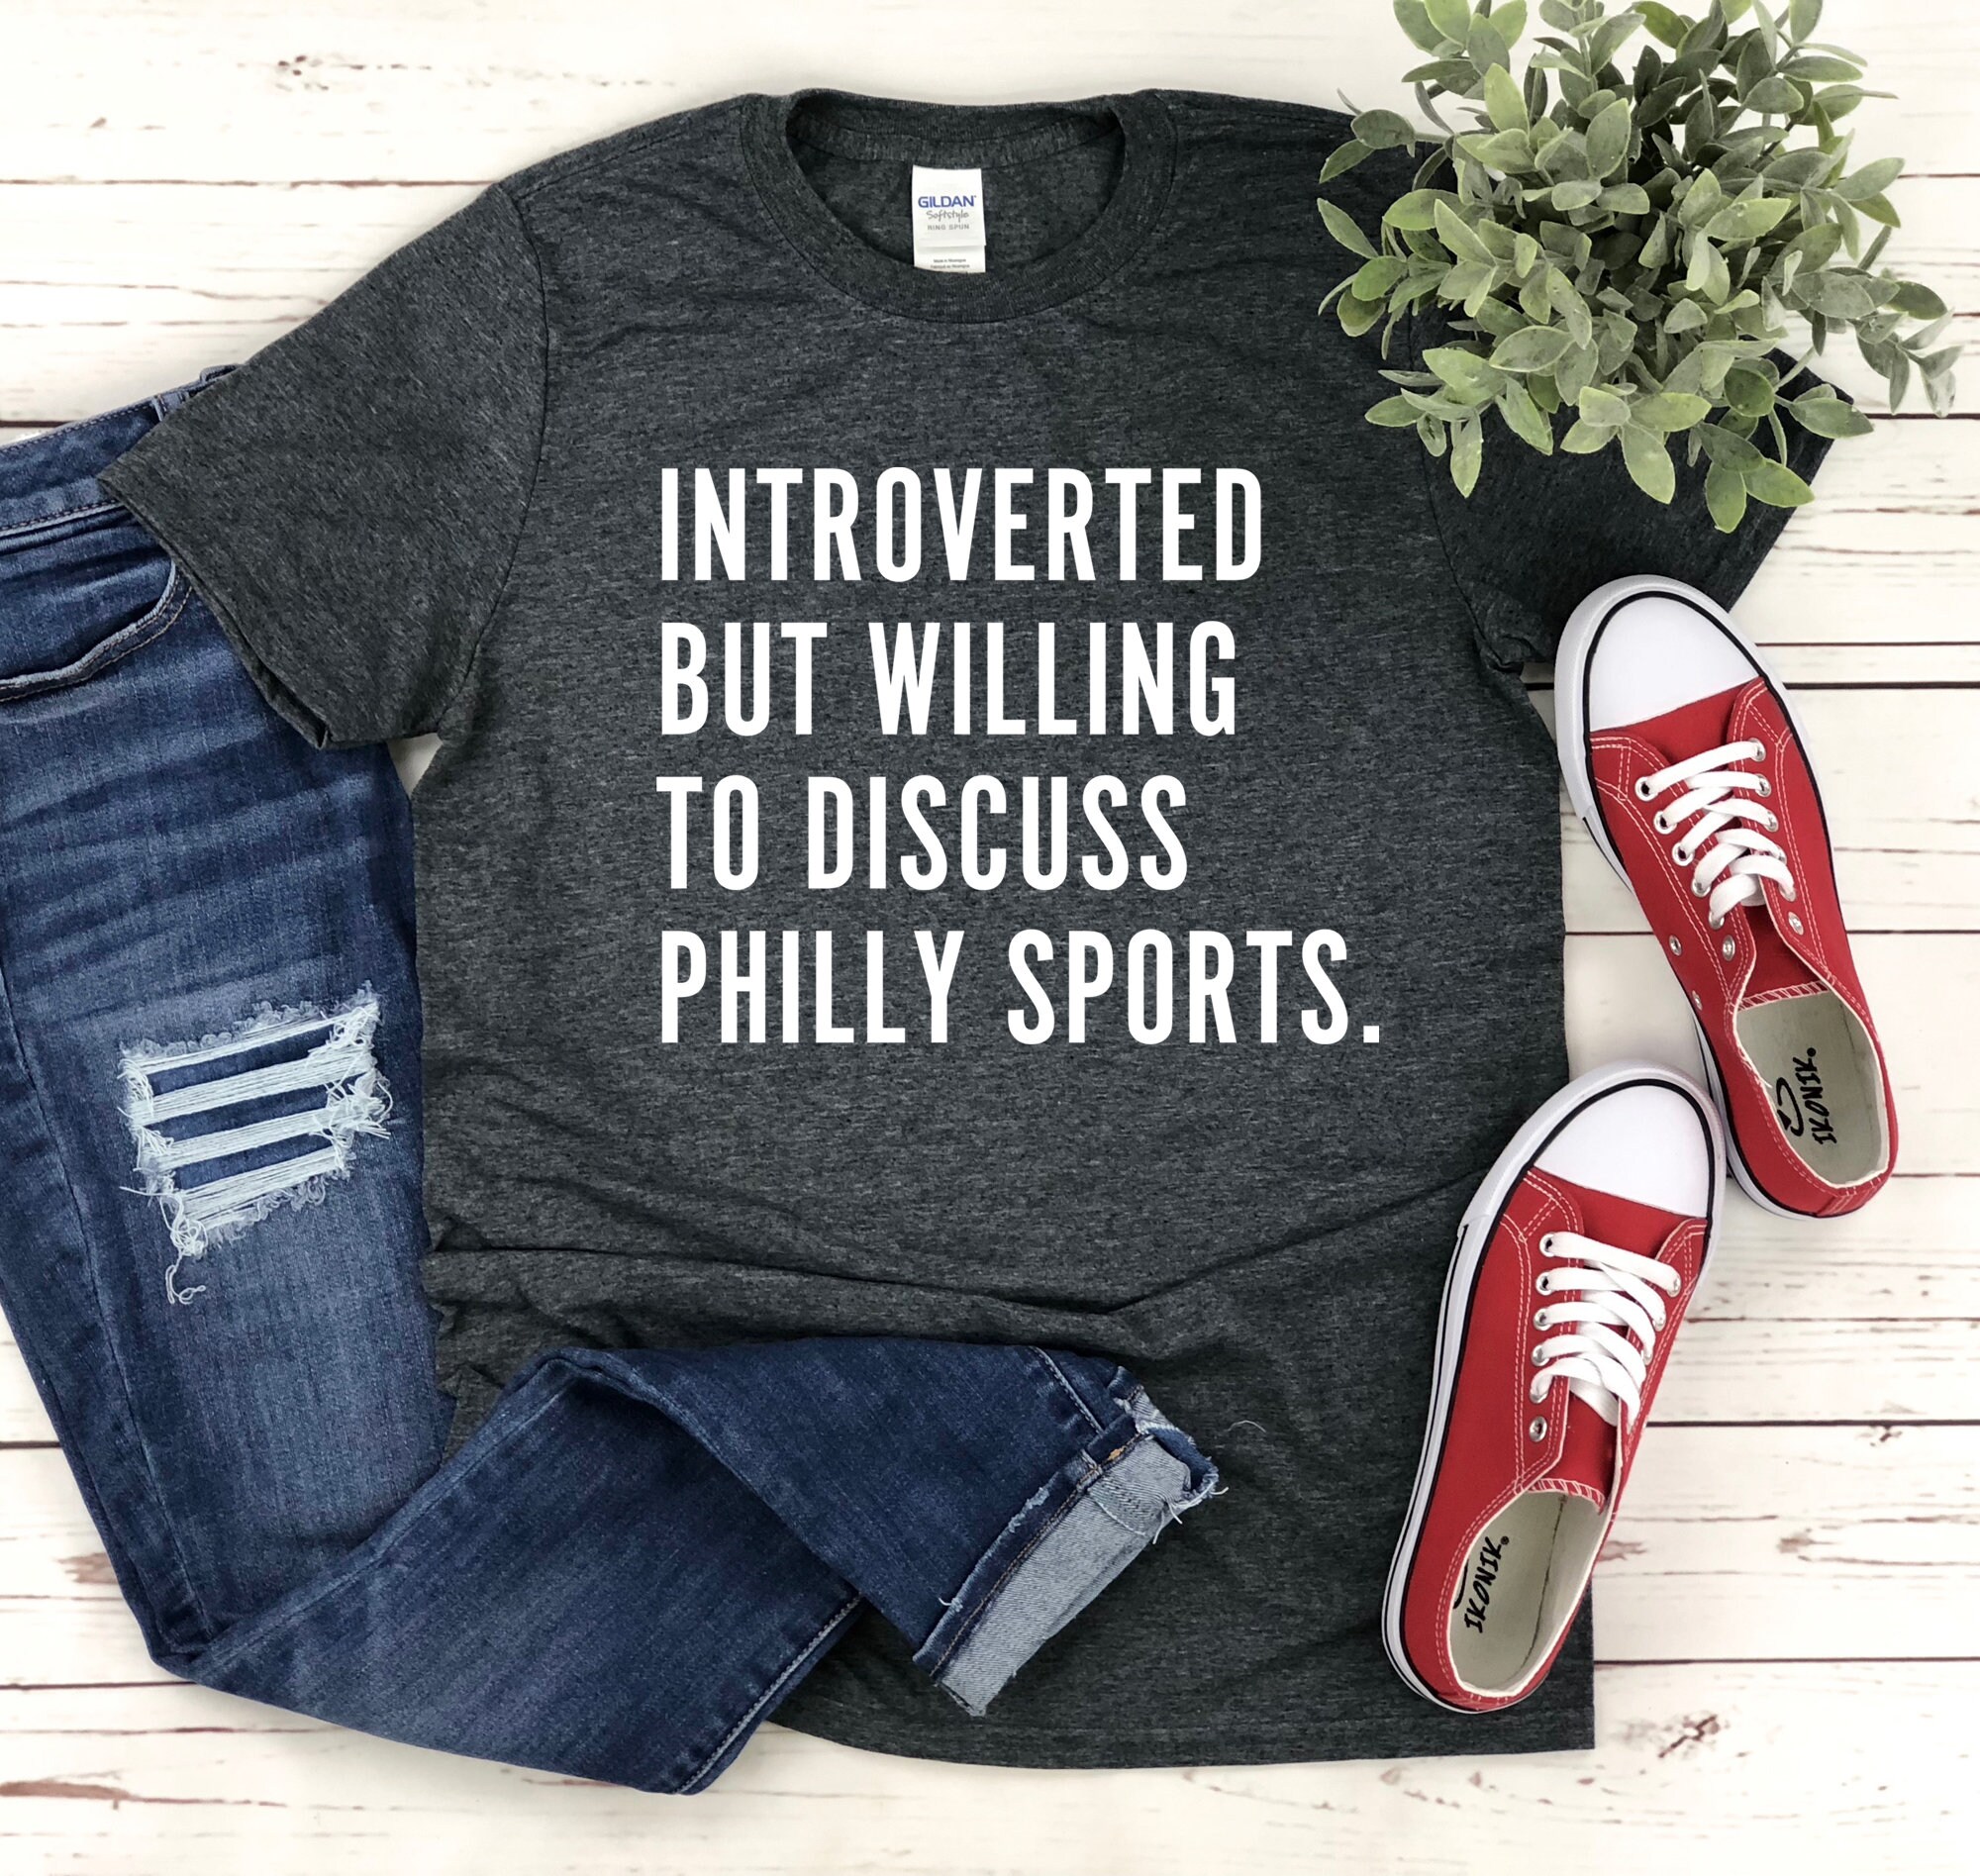 Lids Philadelphia Flyers Starter Offense Long Sleeve Hoodie T-Shirt - Black